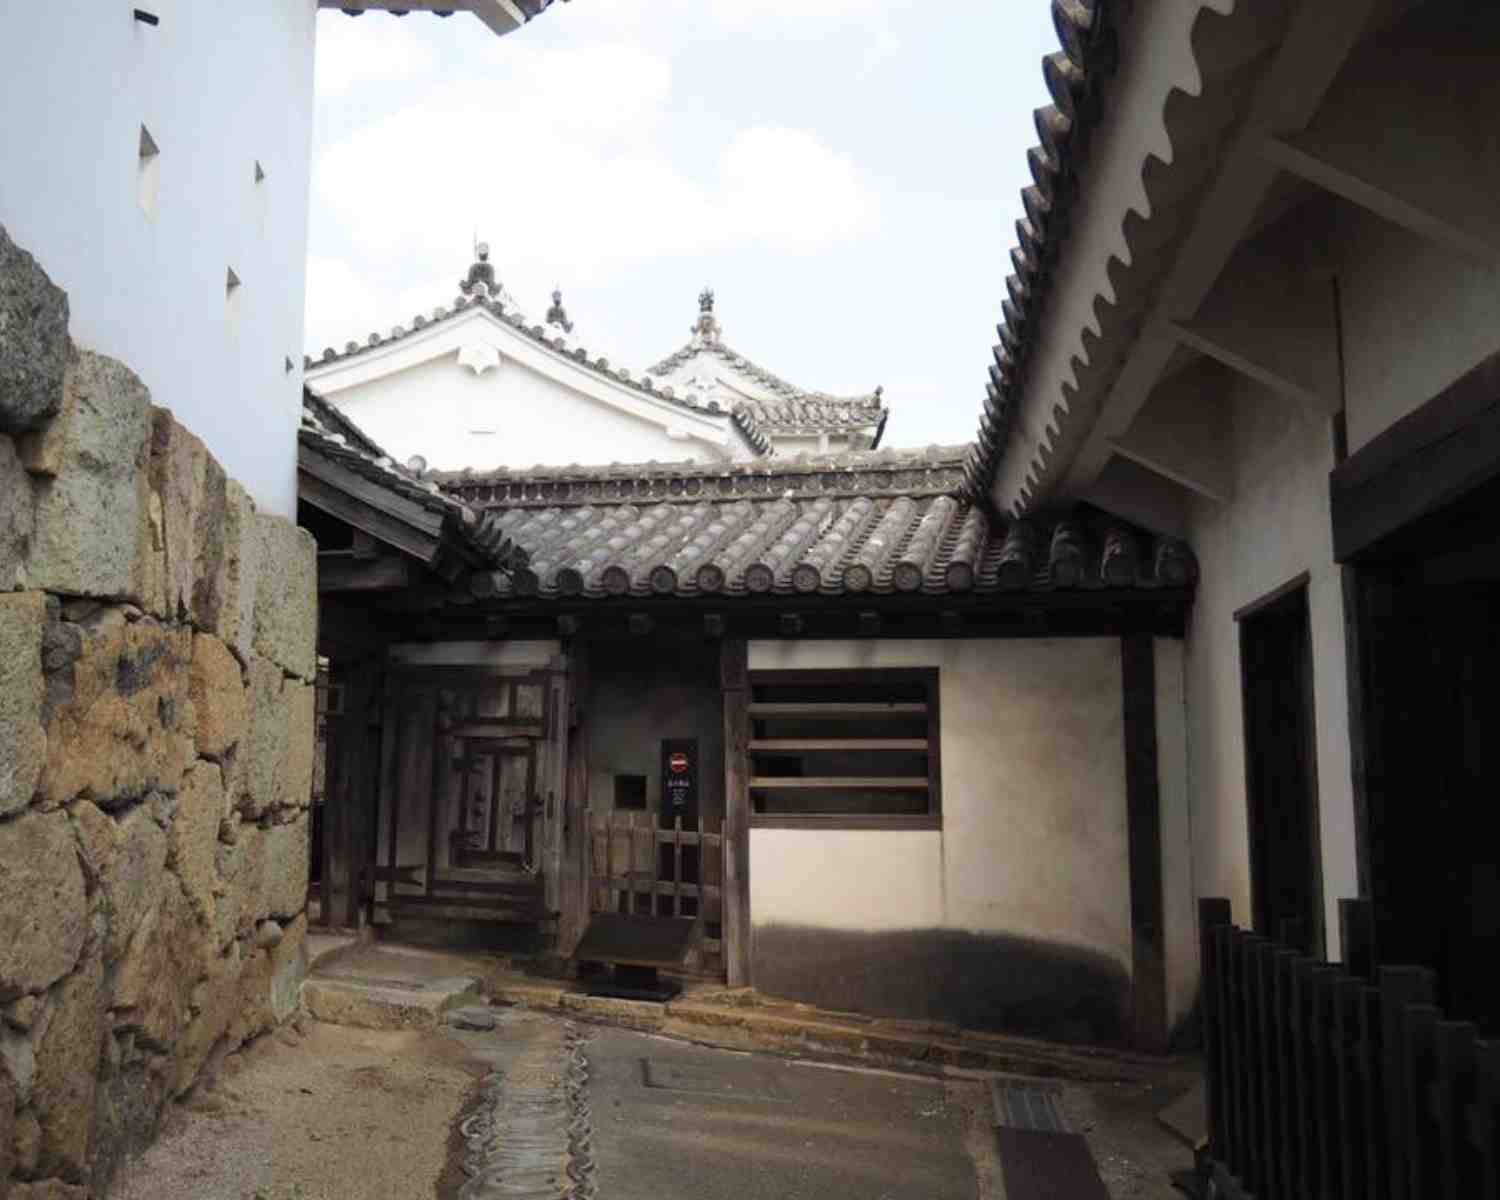 Entering the Main Keep Himeji Castle